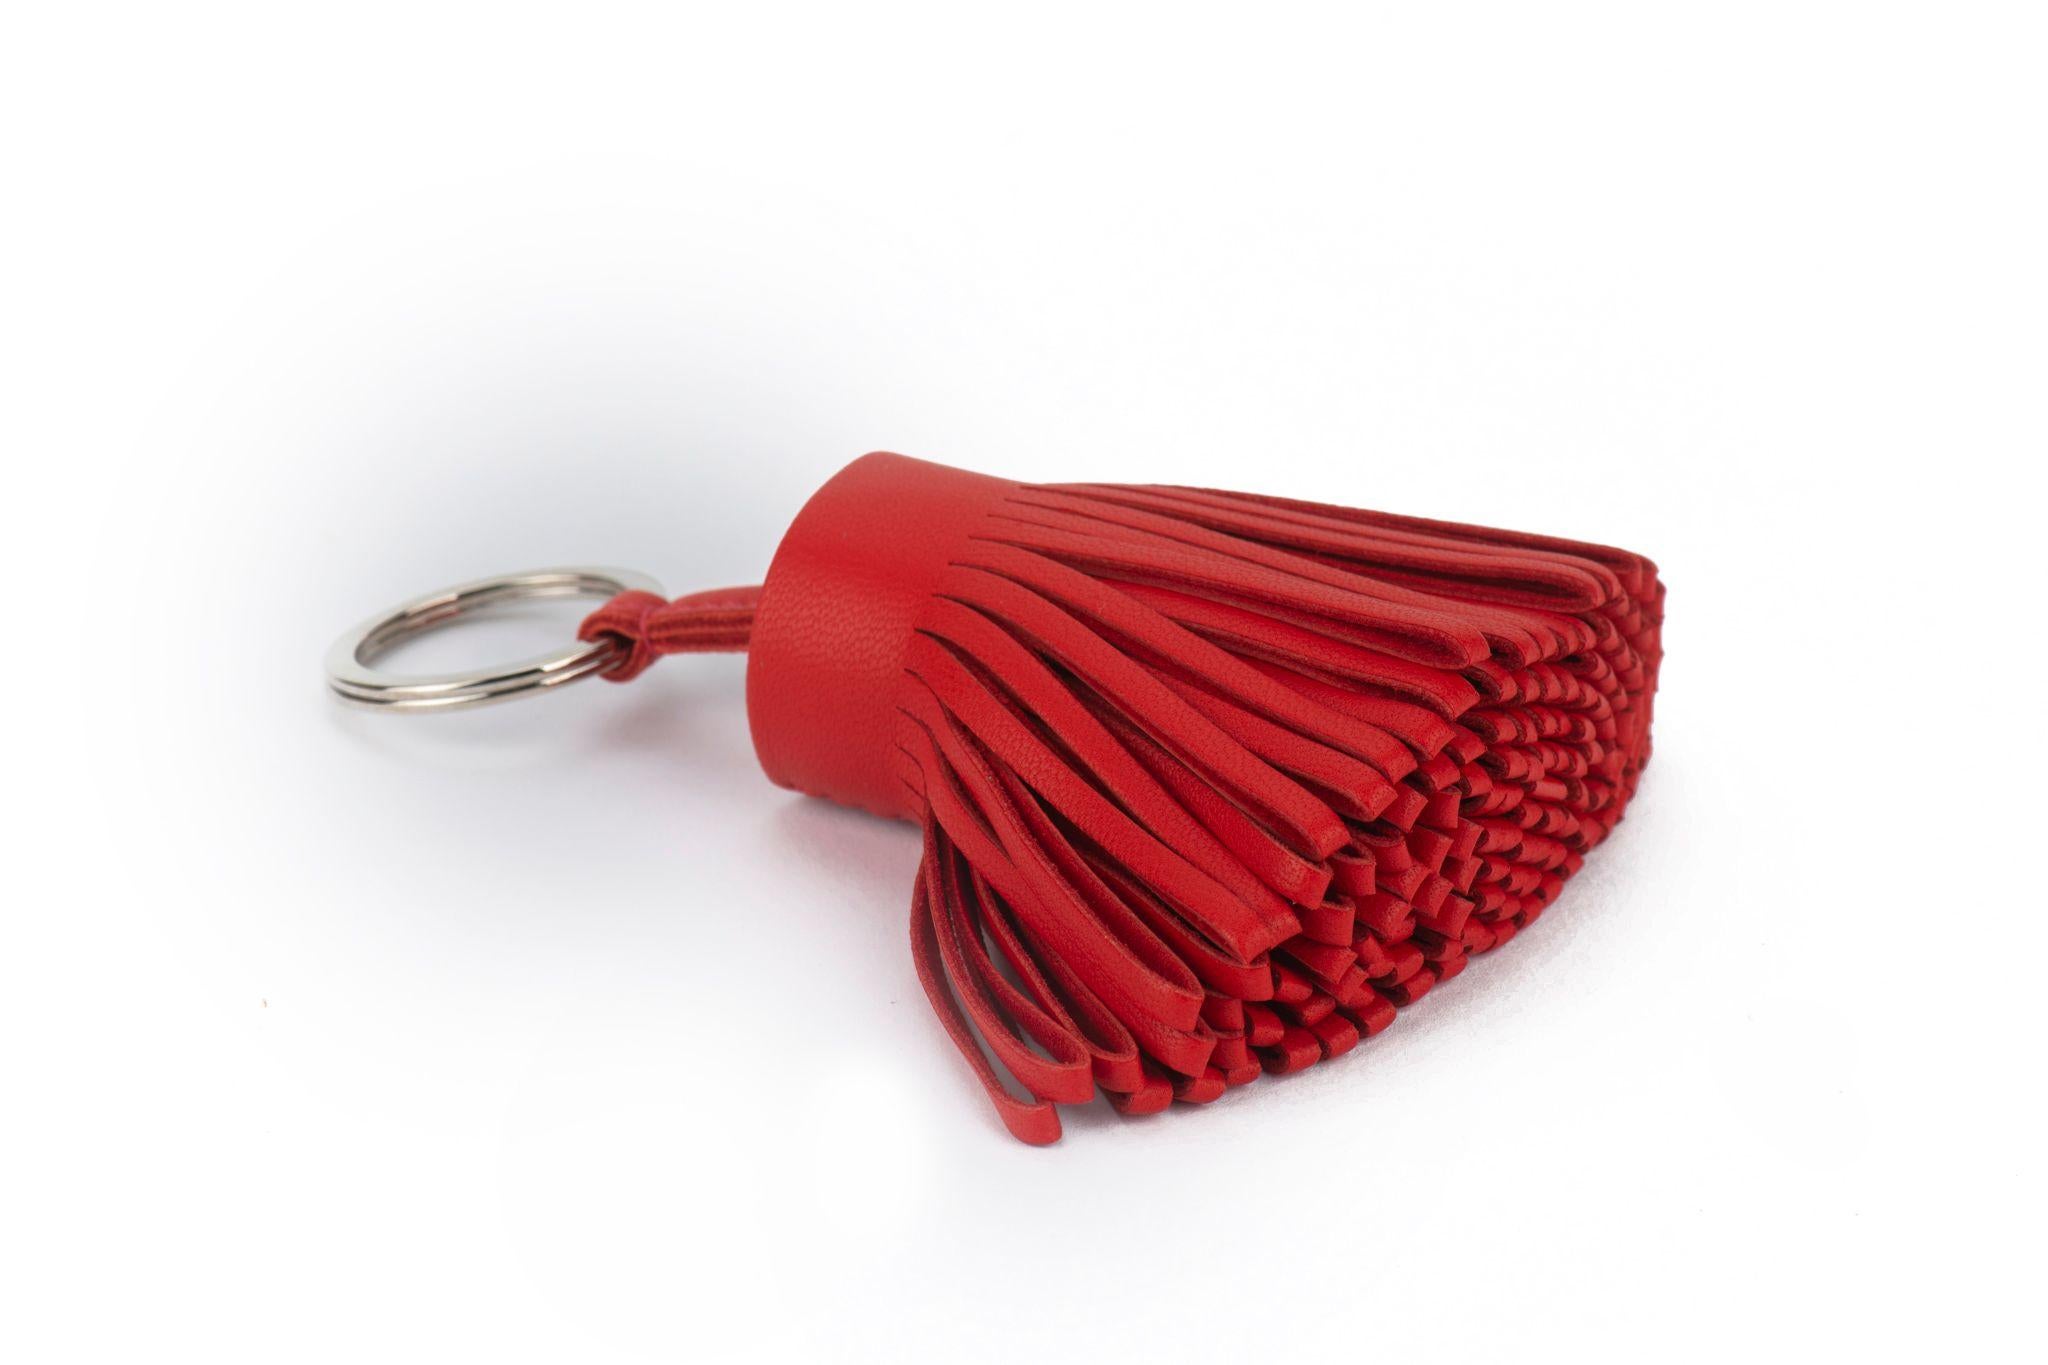 Hermès red lambskin leather Carmen tassel keychain. Brand new with original box in unused condition.